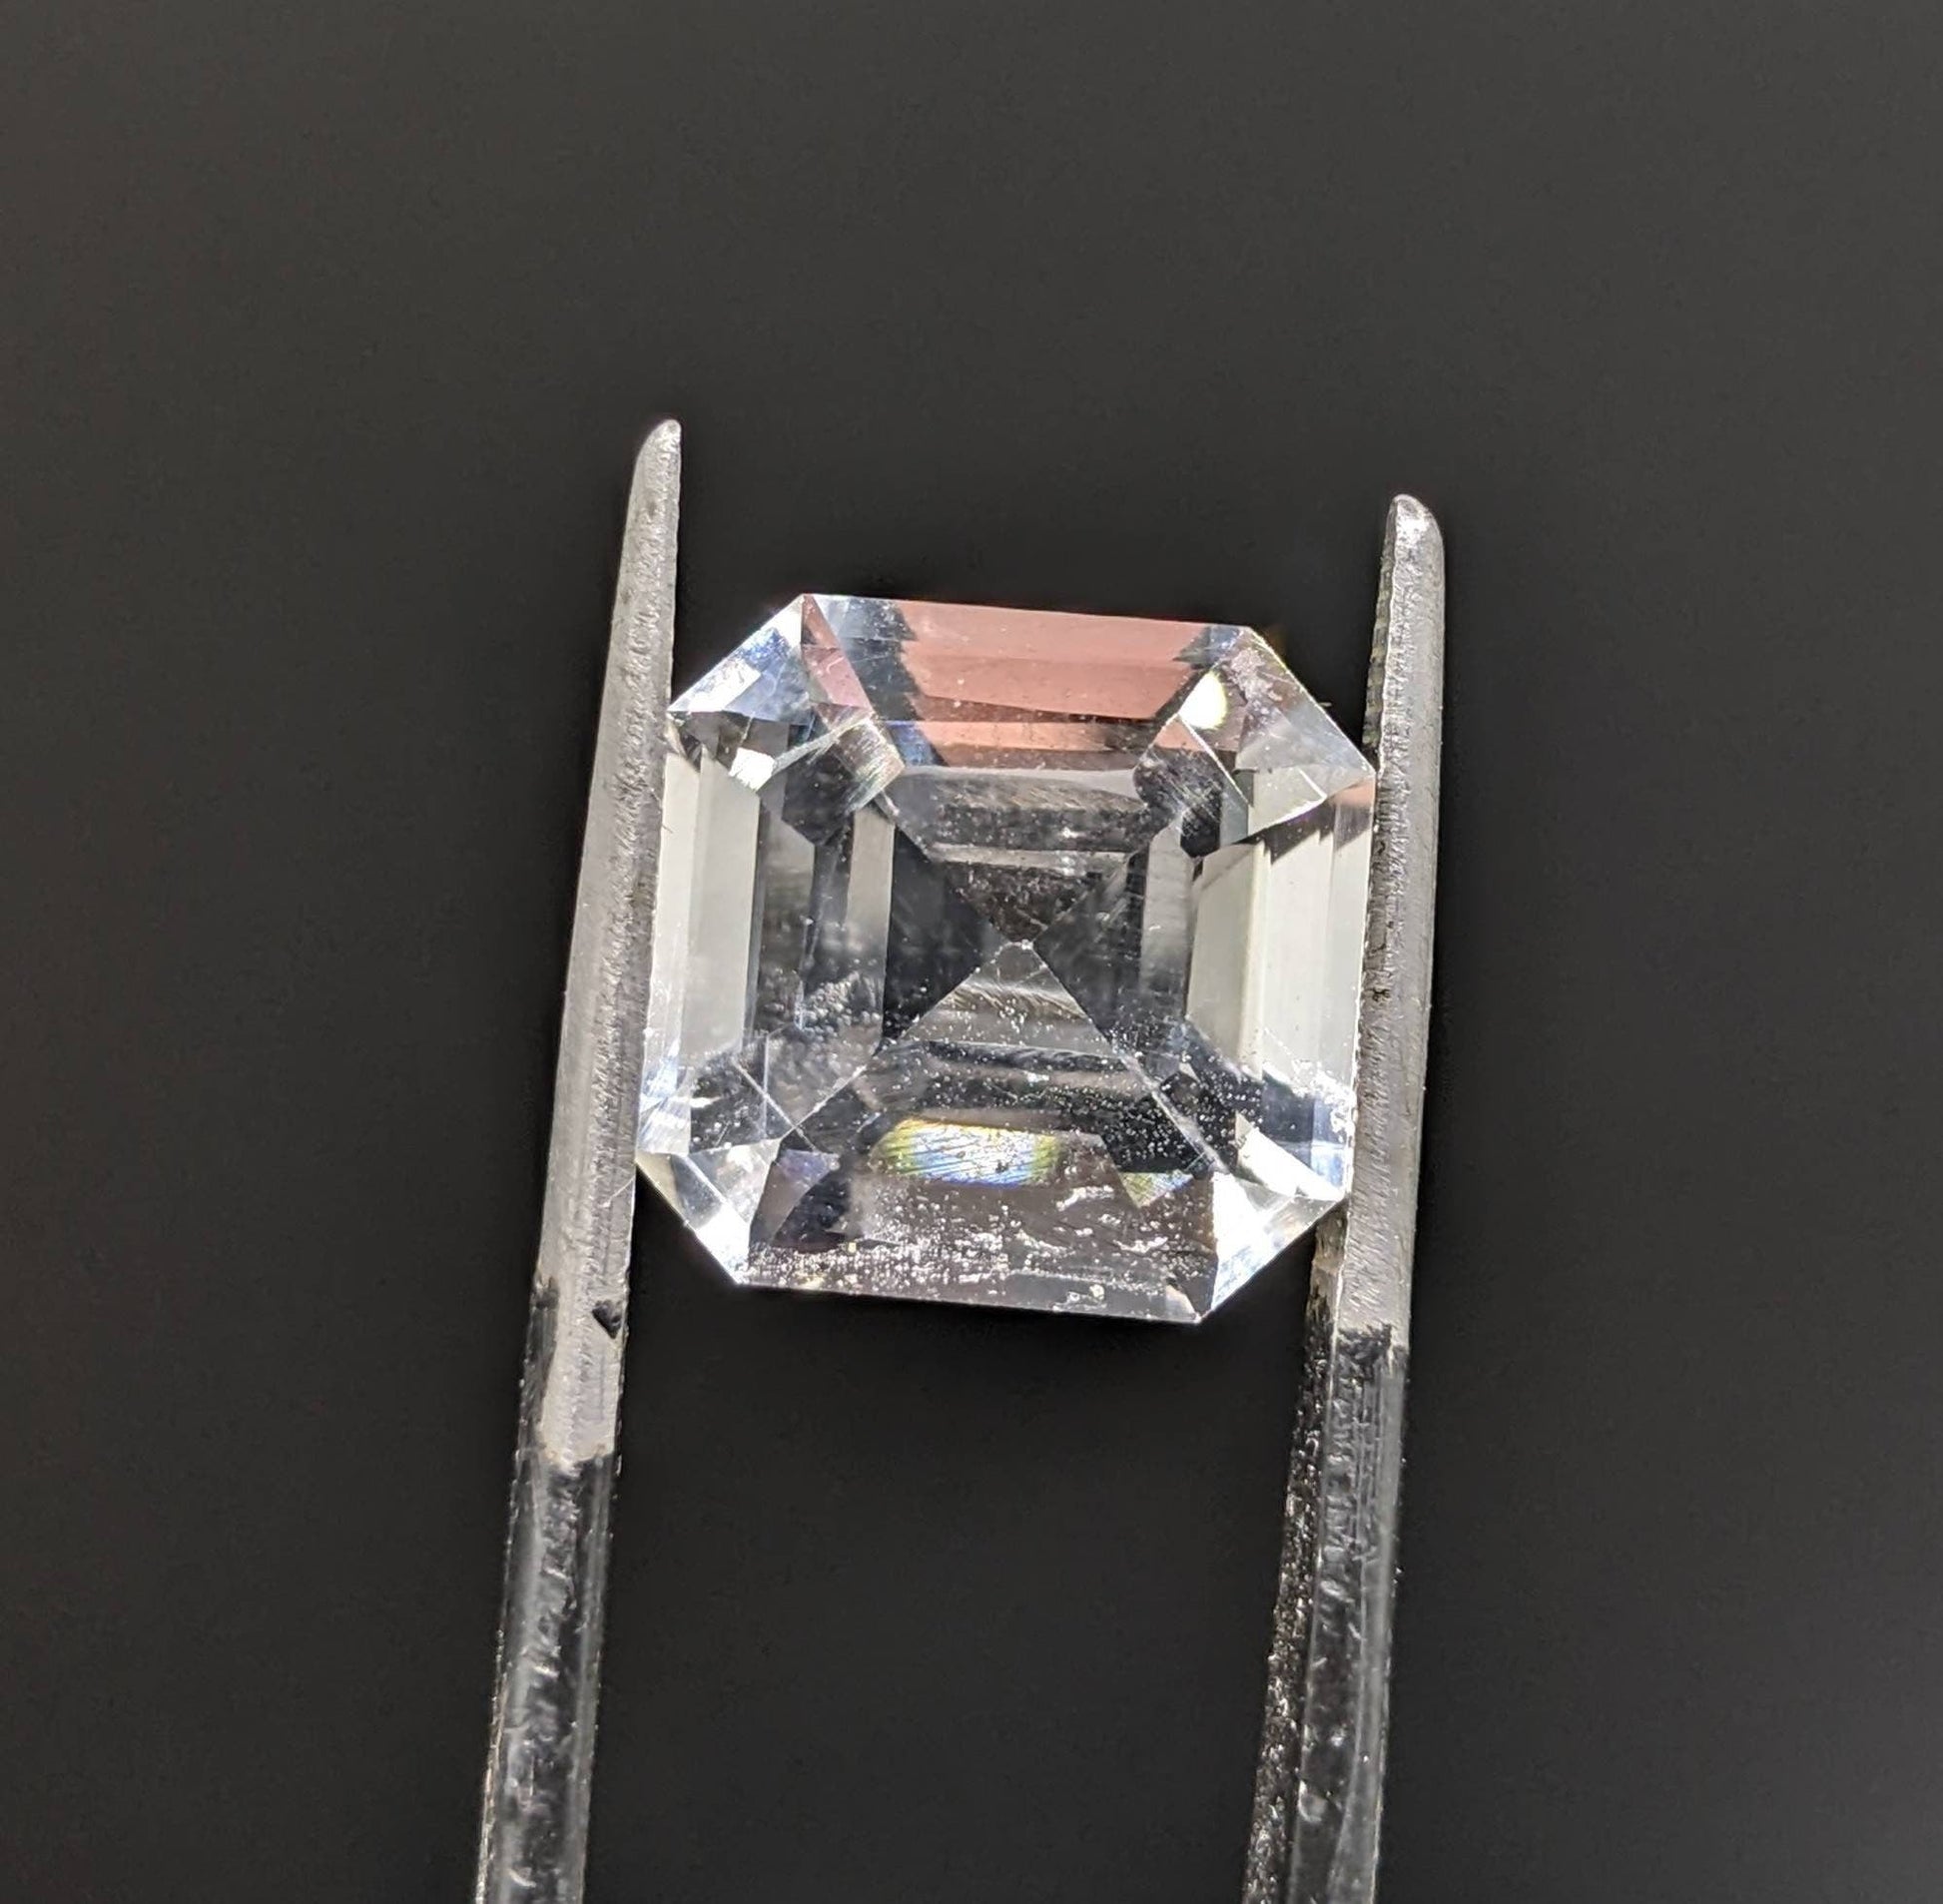 ARSAA GEMS AND MINERALSNatural fine quality emerald cut shape  faceted 7.5 carats clear quartz gem - Premium  from ARSAA GEMS AND MINERALS - Just $8.00! Shop now at ARSAA GEMS AND MINERALS